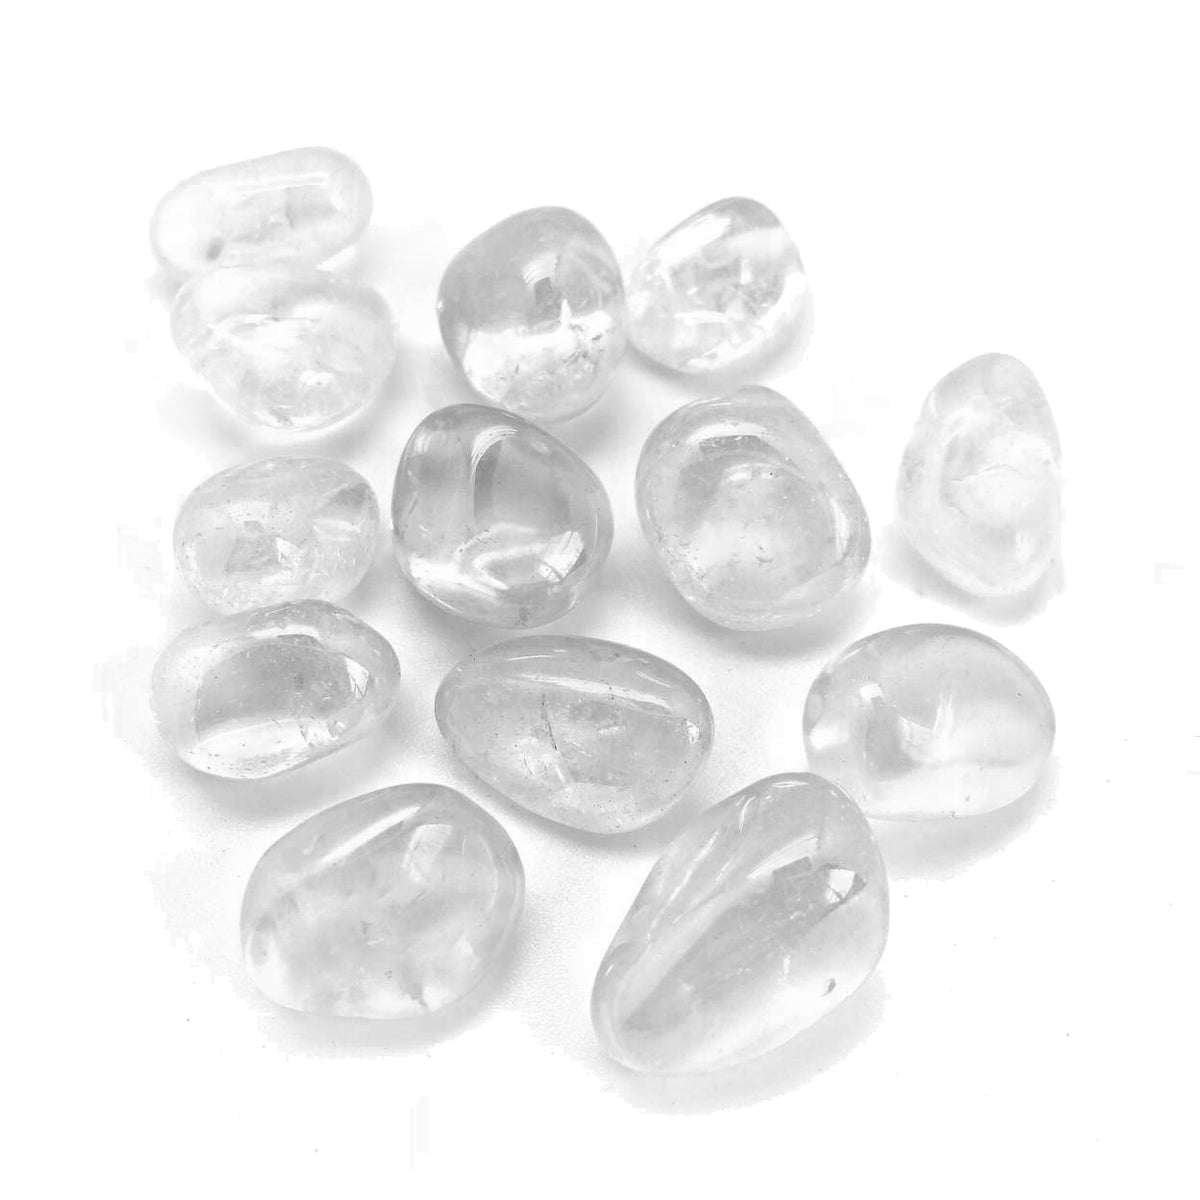 Clear Quartz - Crystal - Healing Properties